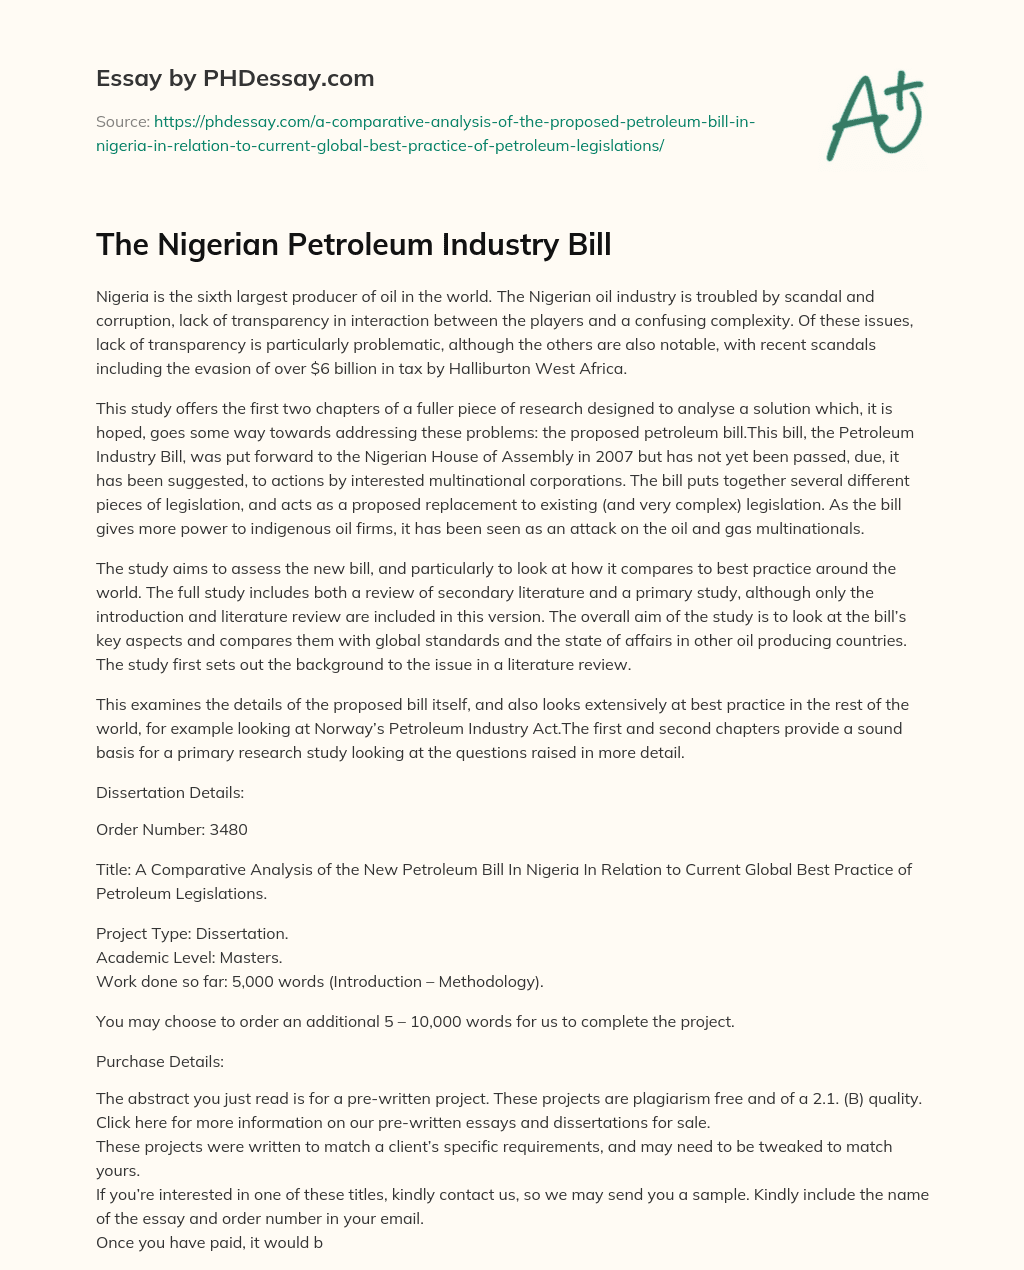 The Nigerian Petroleum Industry Bill essay